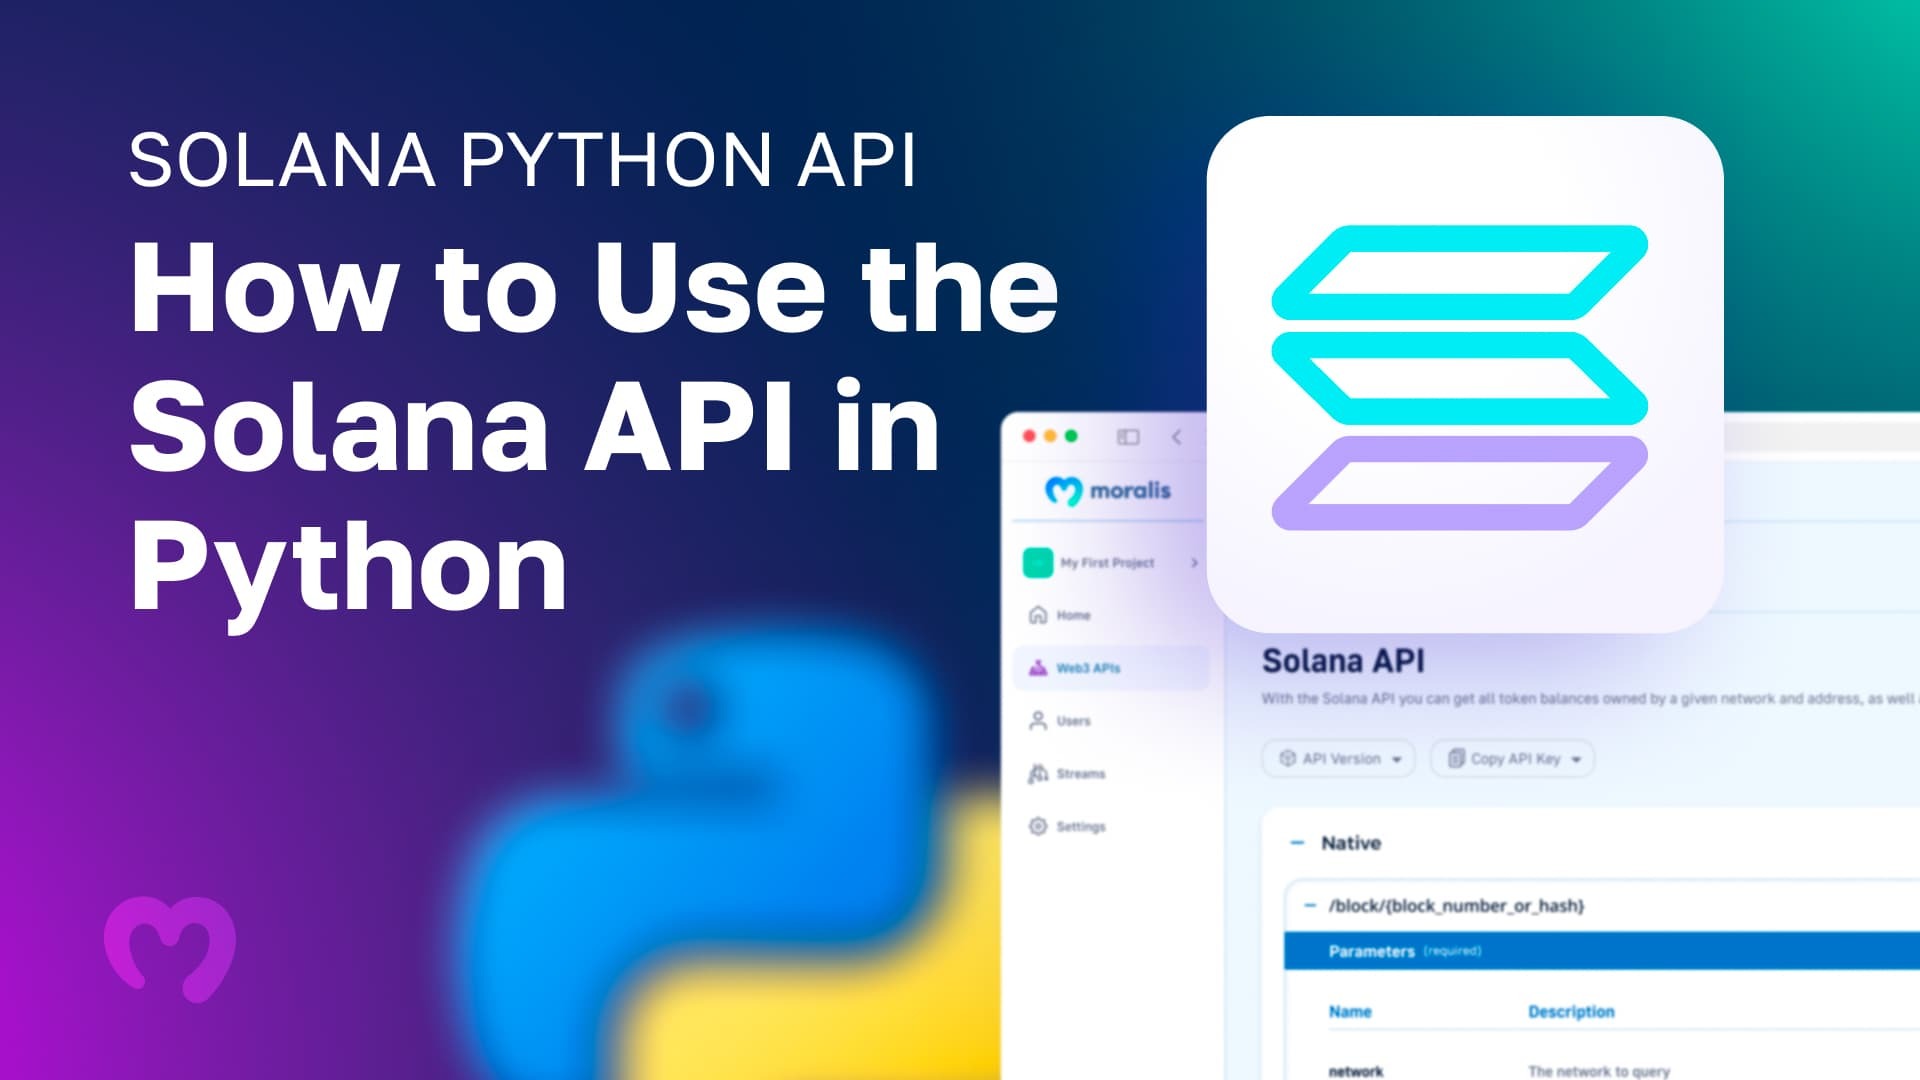 Solana Python API - How to Use the Solana API in Python